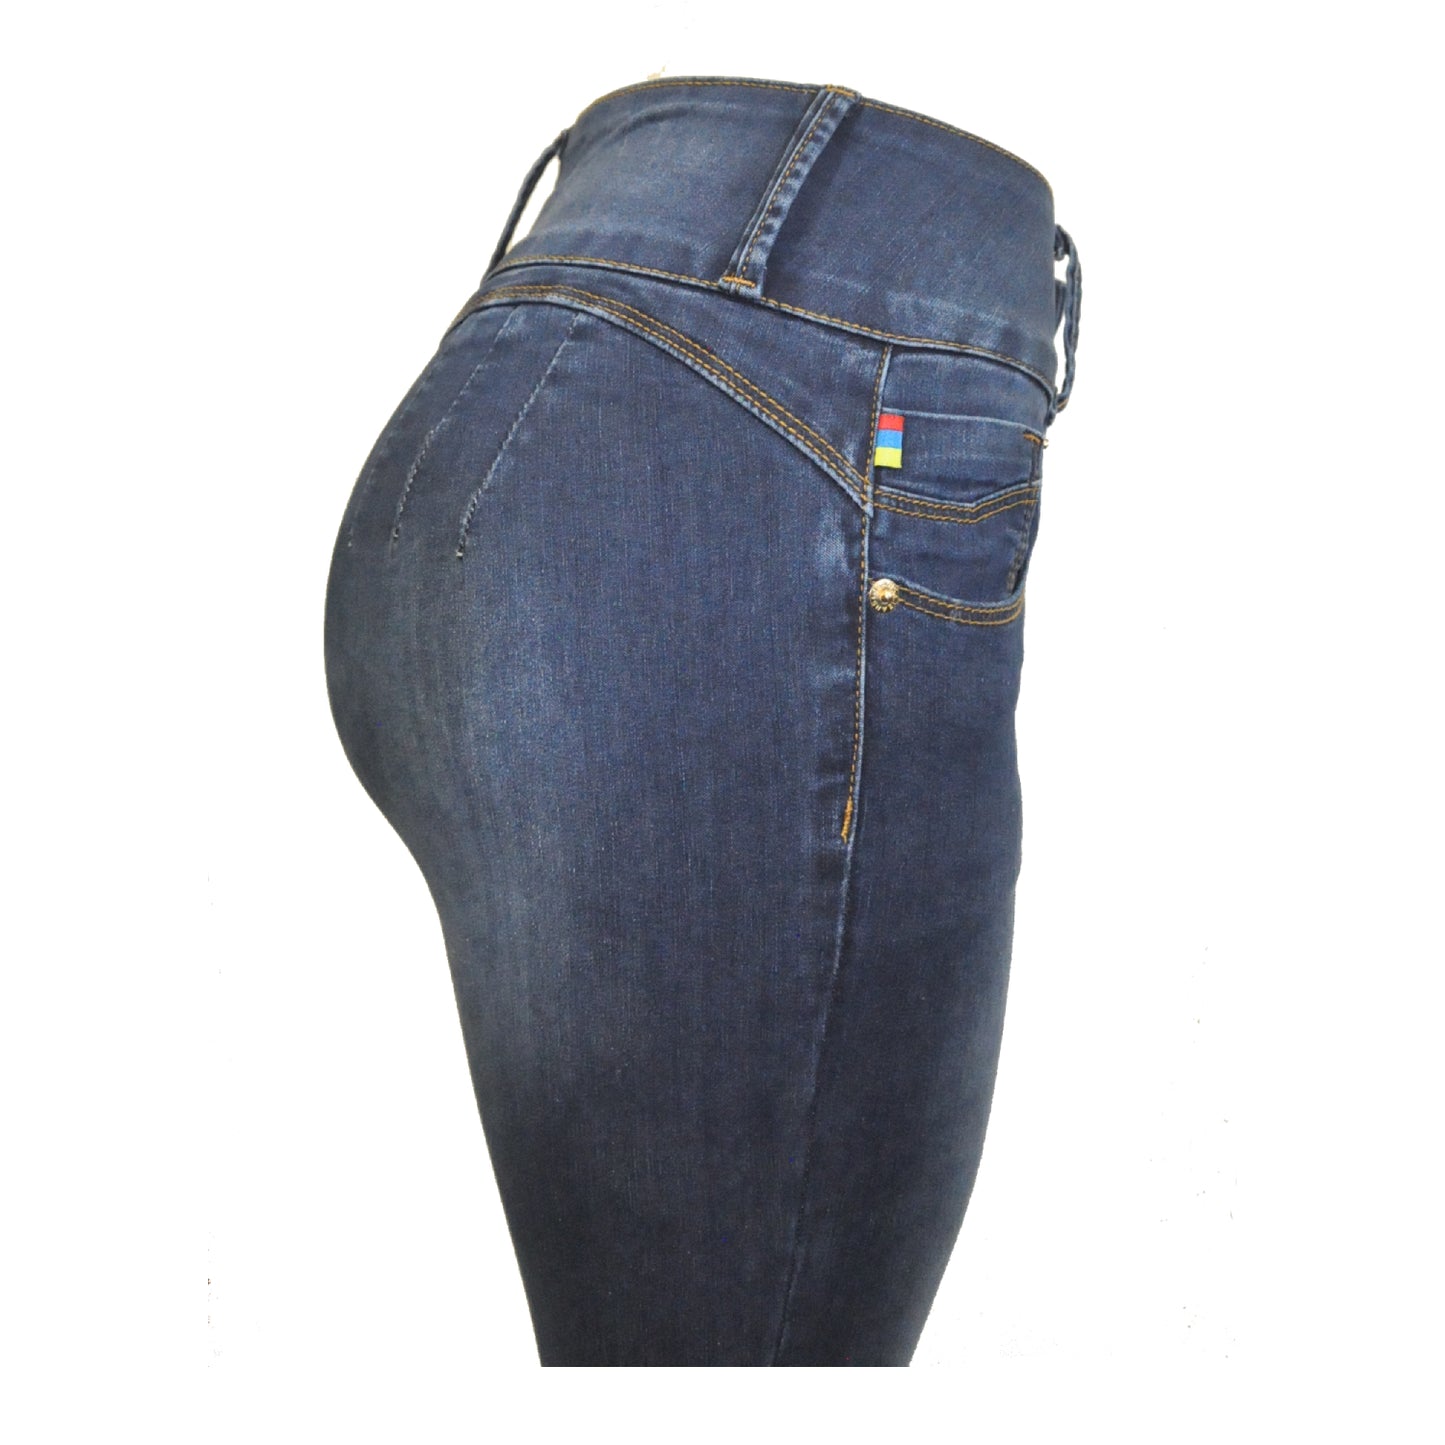 Women's Premium Skinny Jeans Model 68513S